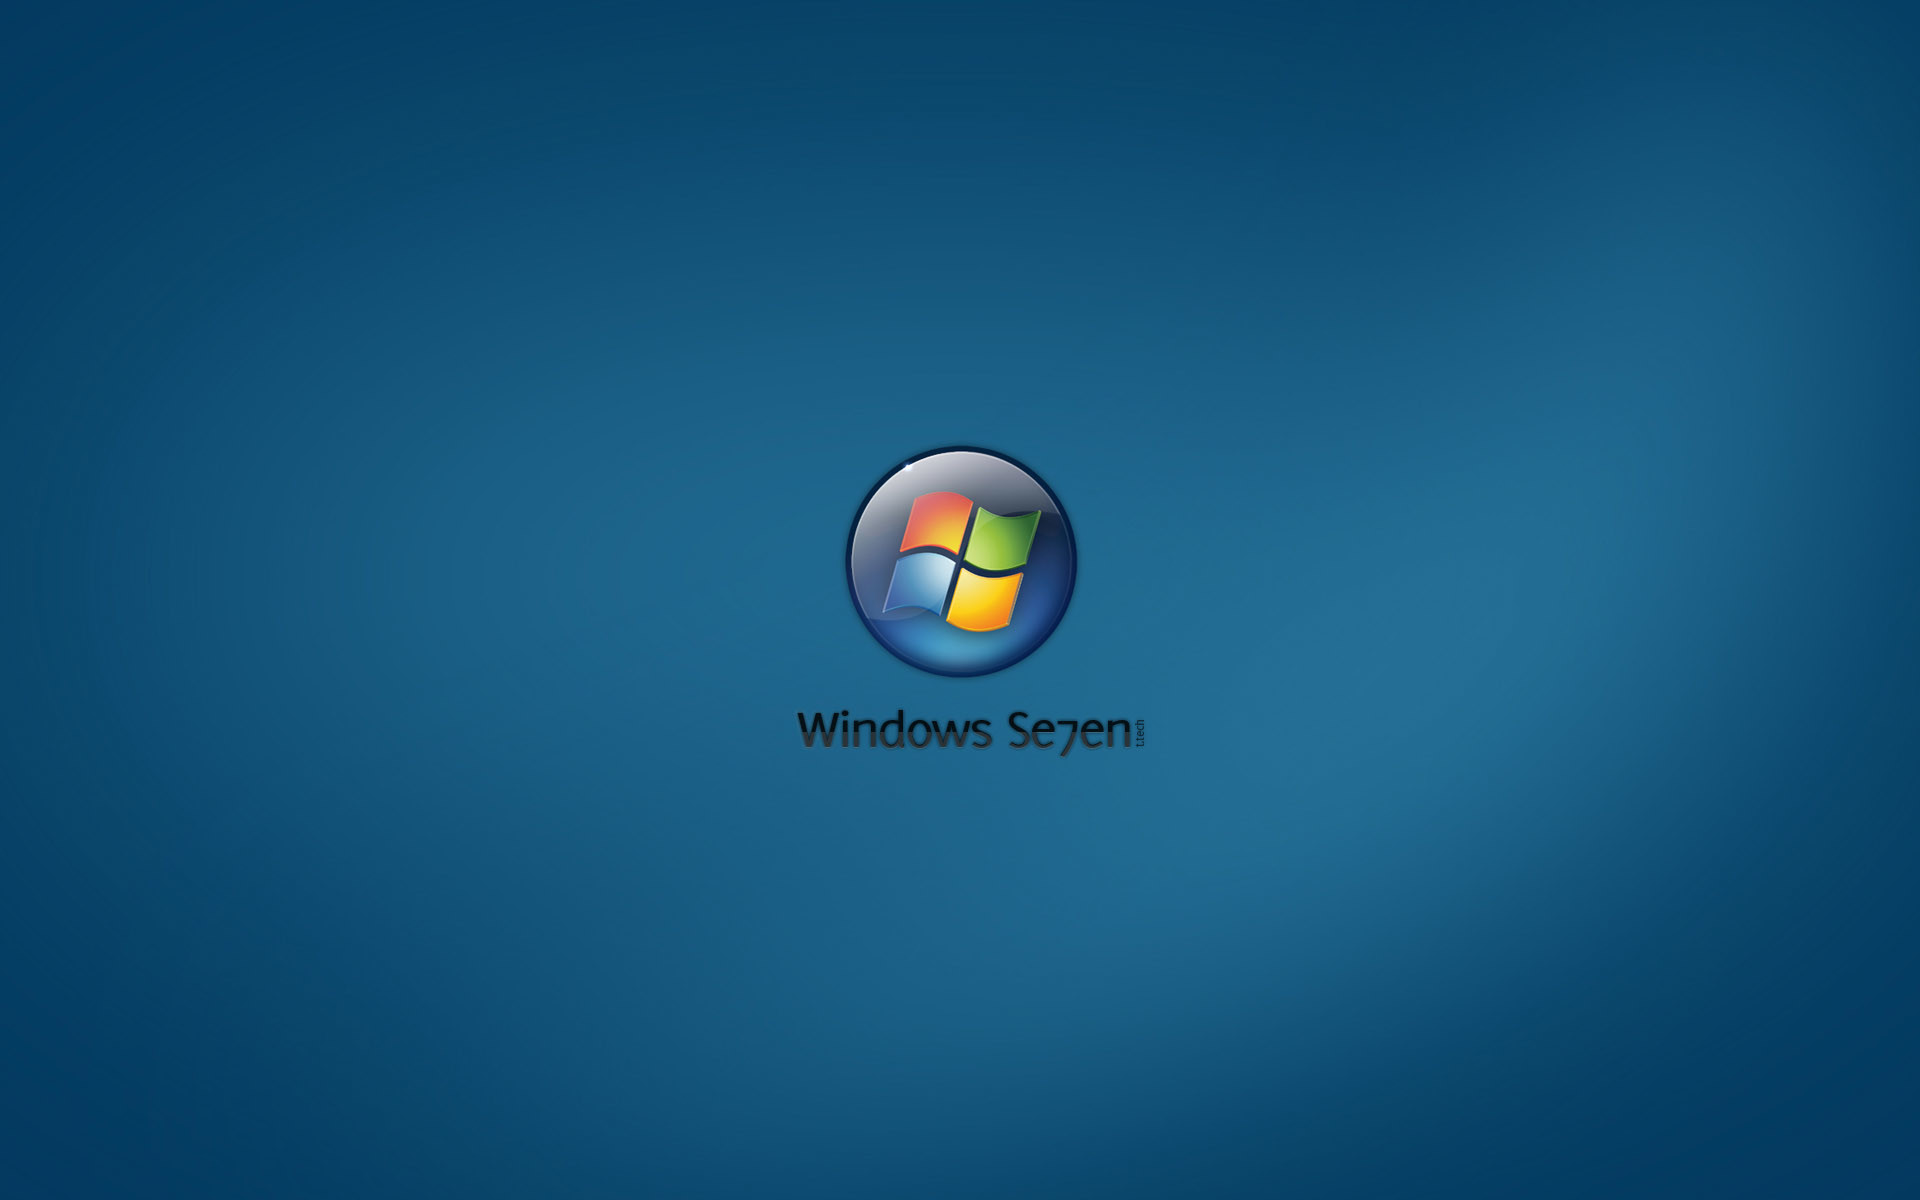 For your Windows 7 desktop. If